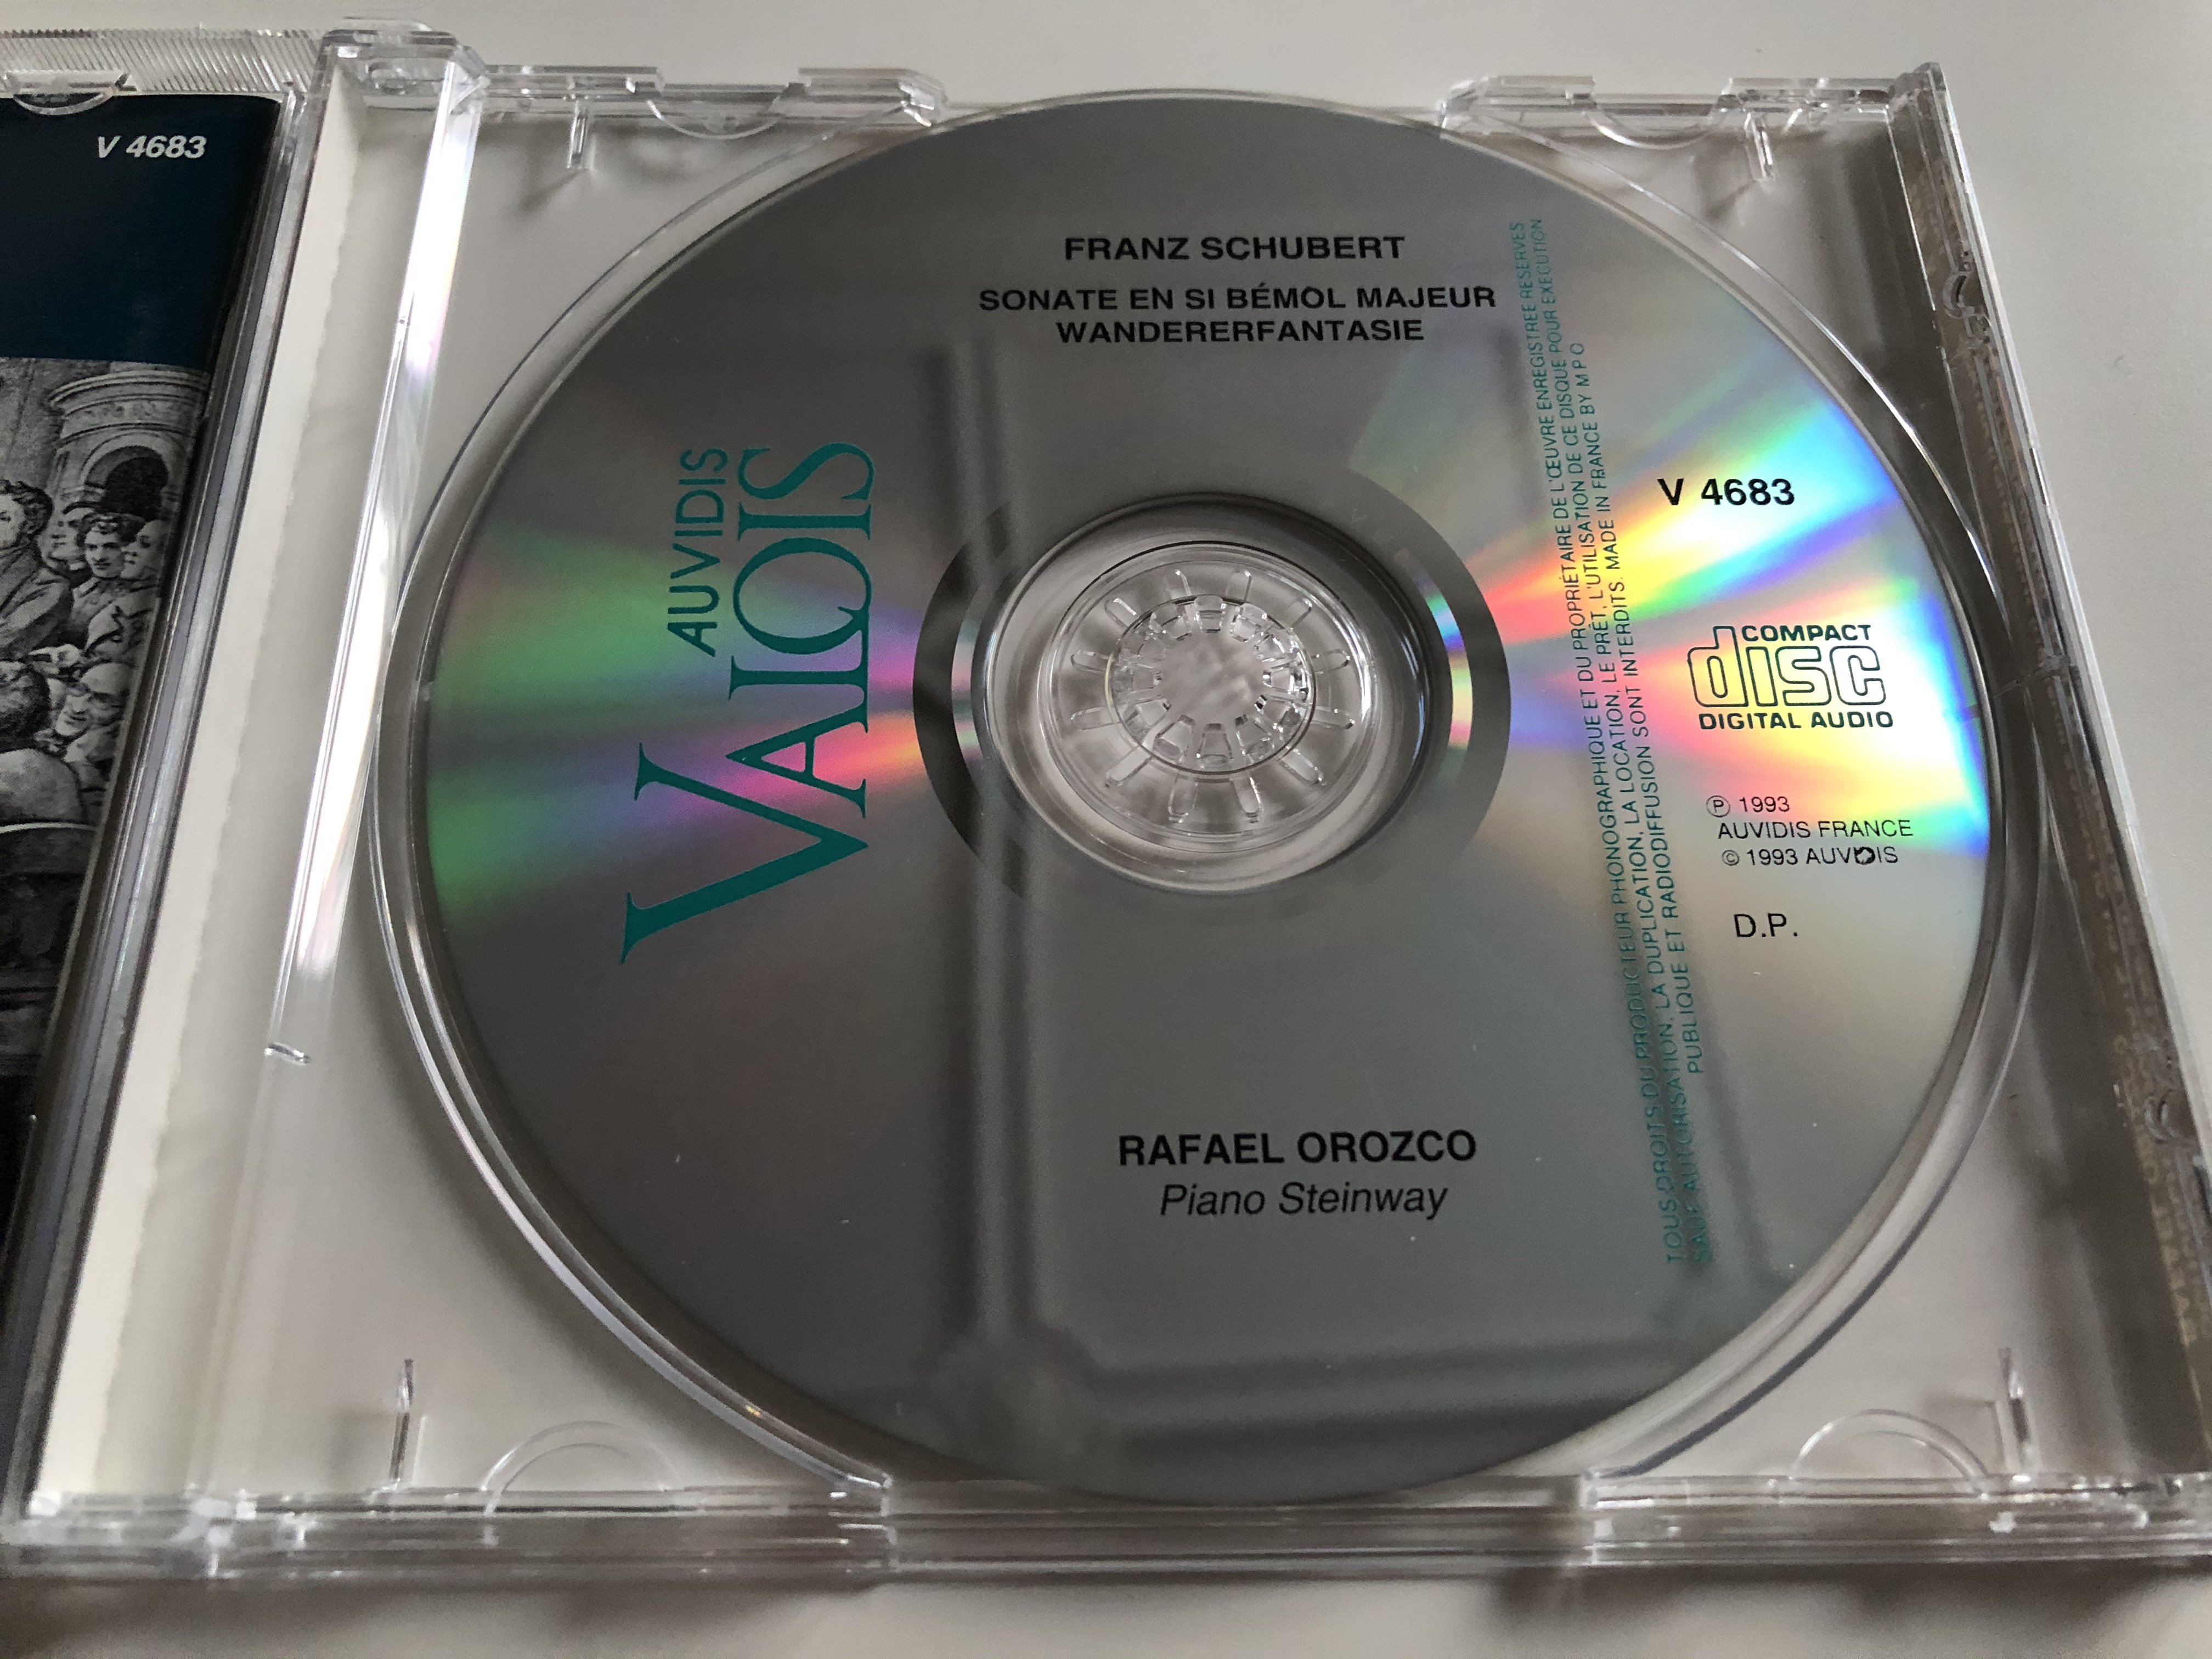 schubert-sonate-en-si-b-mol-majeur-wandererfantaisie-rafael-orozco-auvidis-france-audio-cd-1993-v-4683-7-.jpg